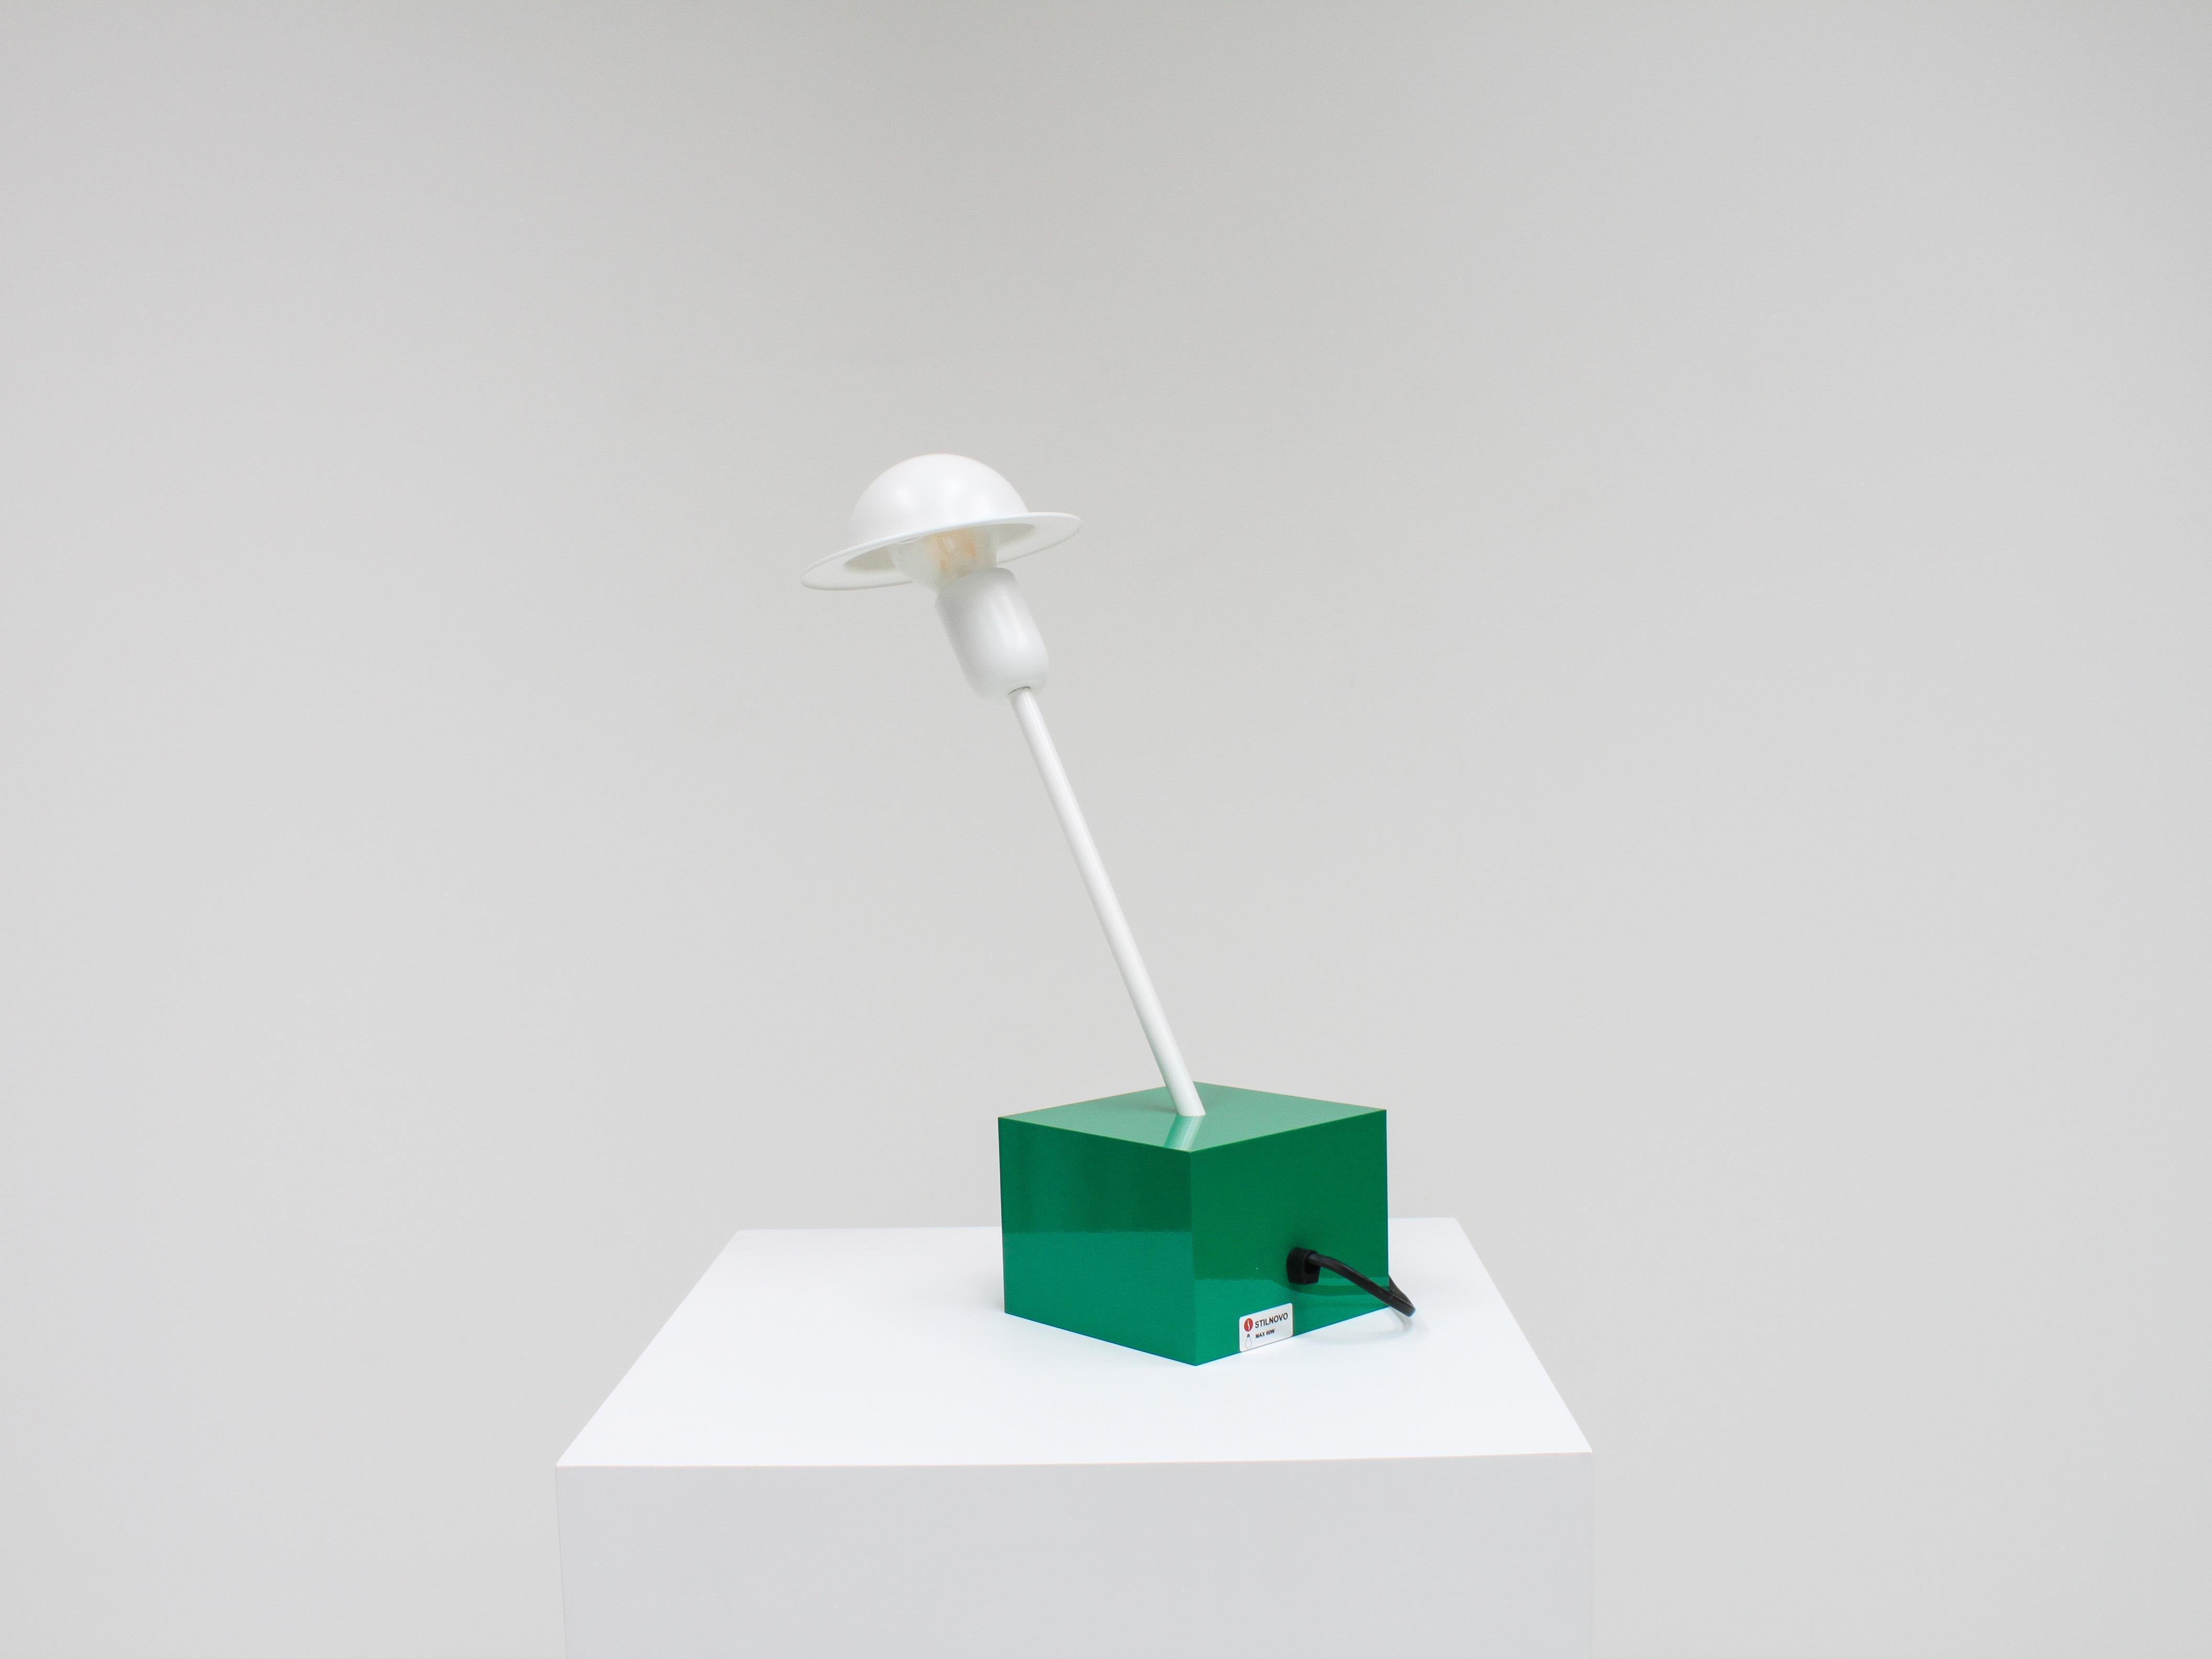 Mid-Century Modern Don Table Lamp by Ettore Sottsass, Designed in 1977, Stilnovo, Italy